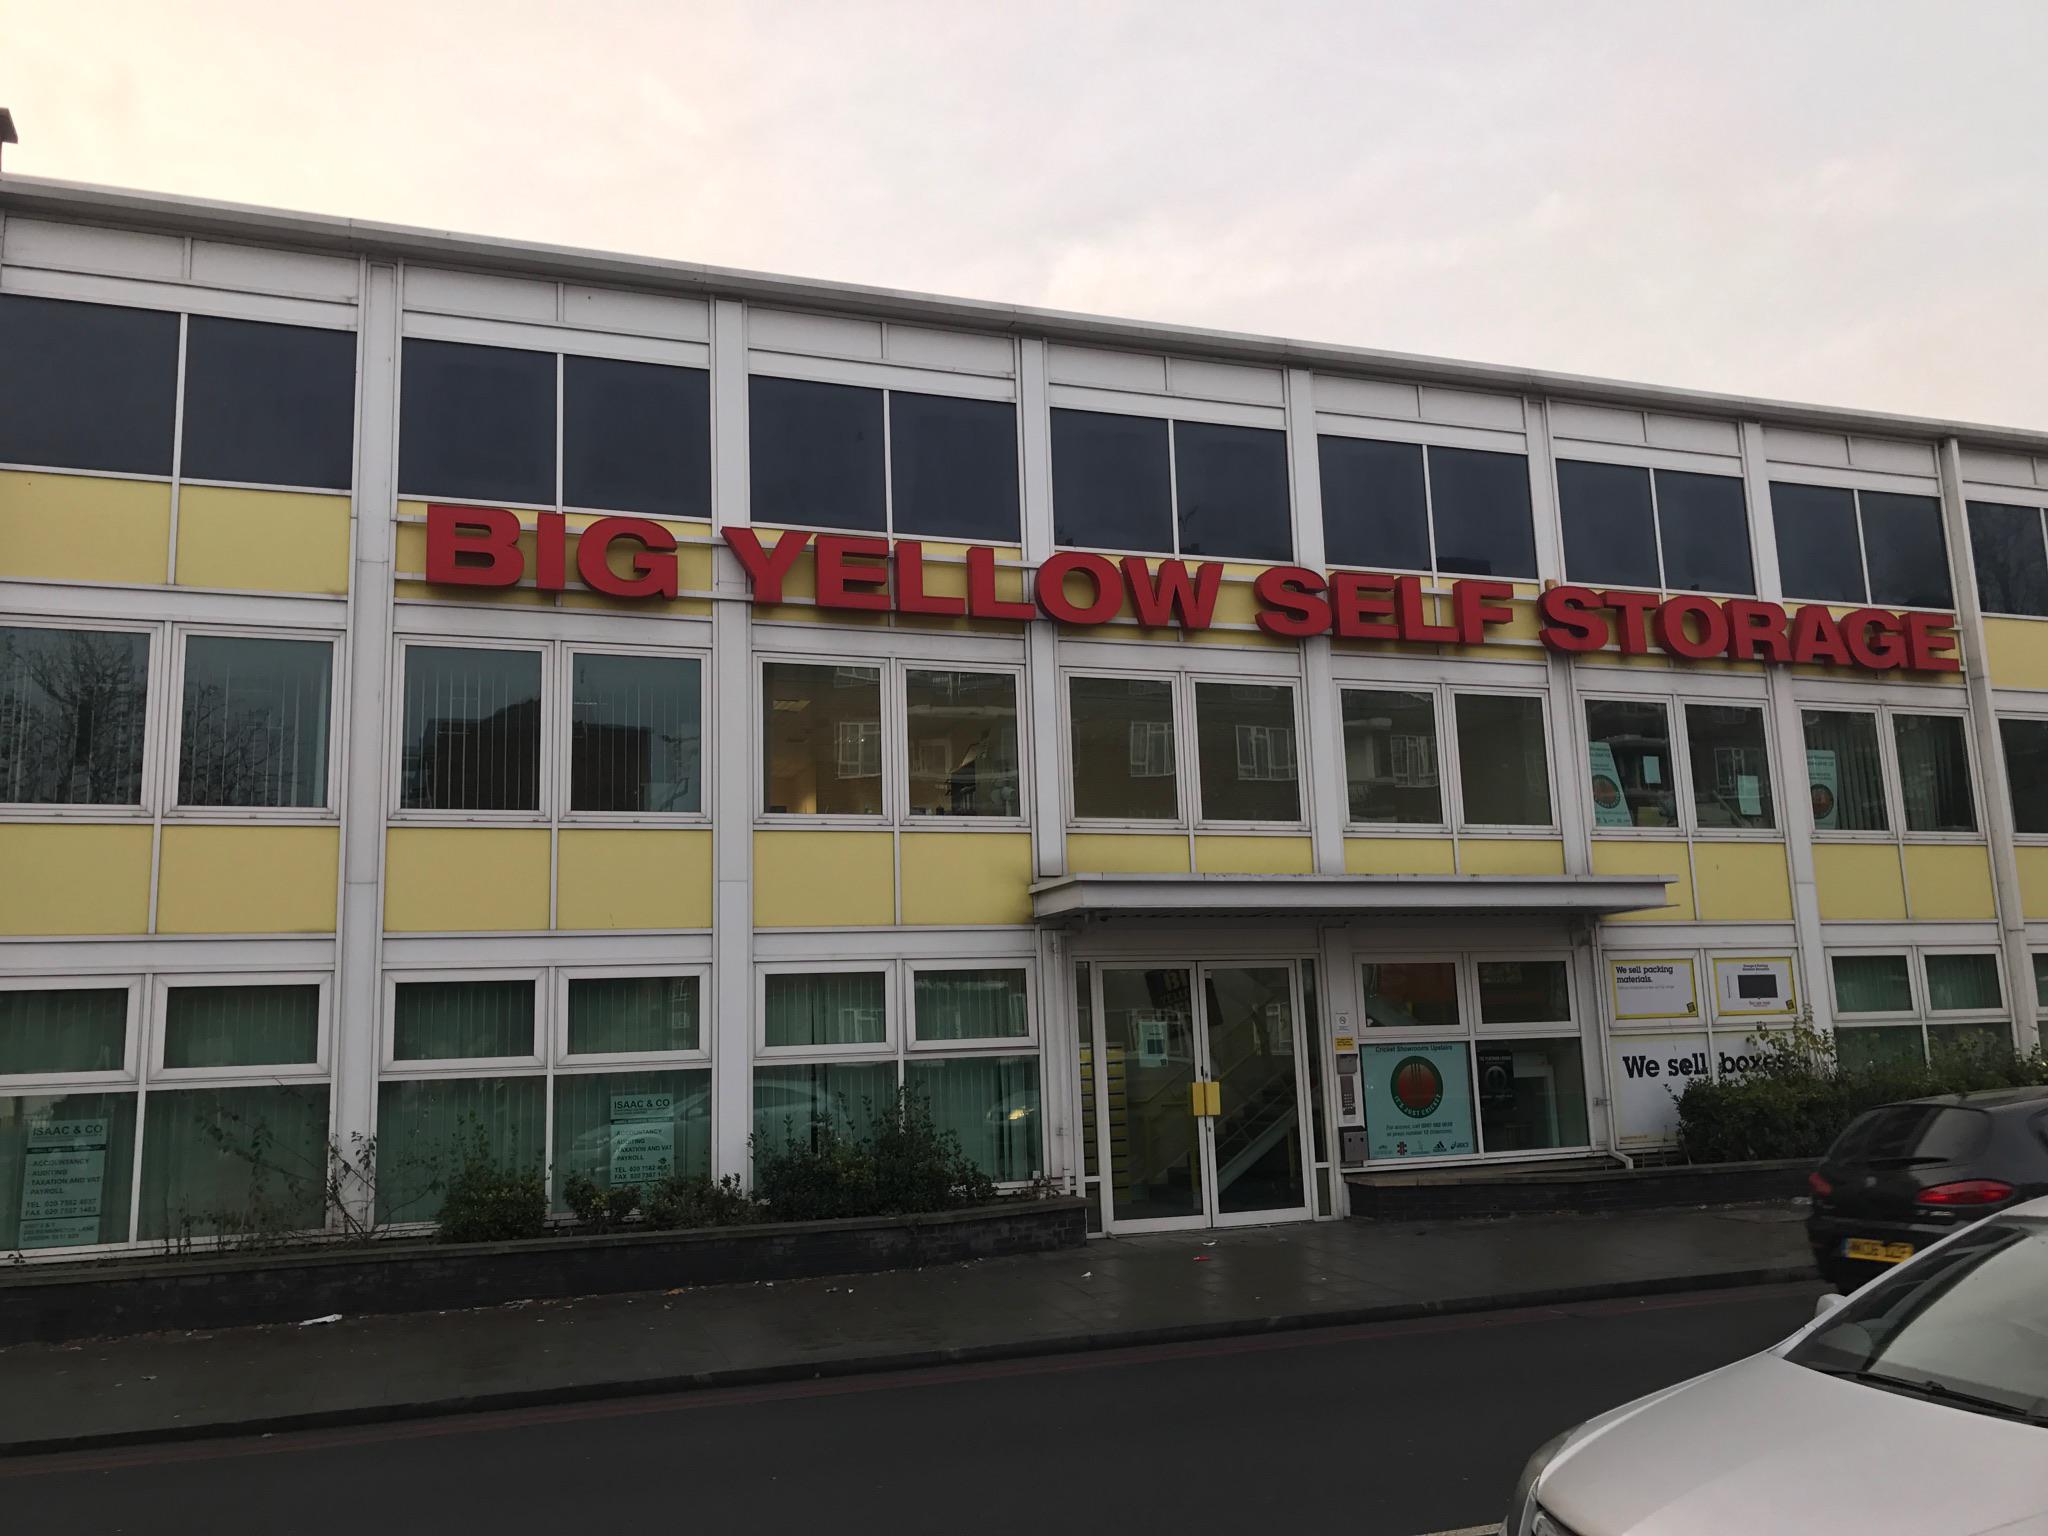 Big Yellow Self Storage Kennington London 020 7587 1453